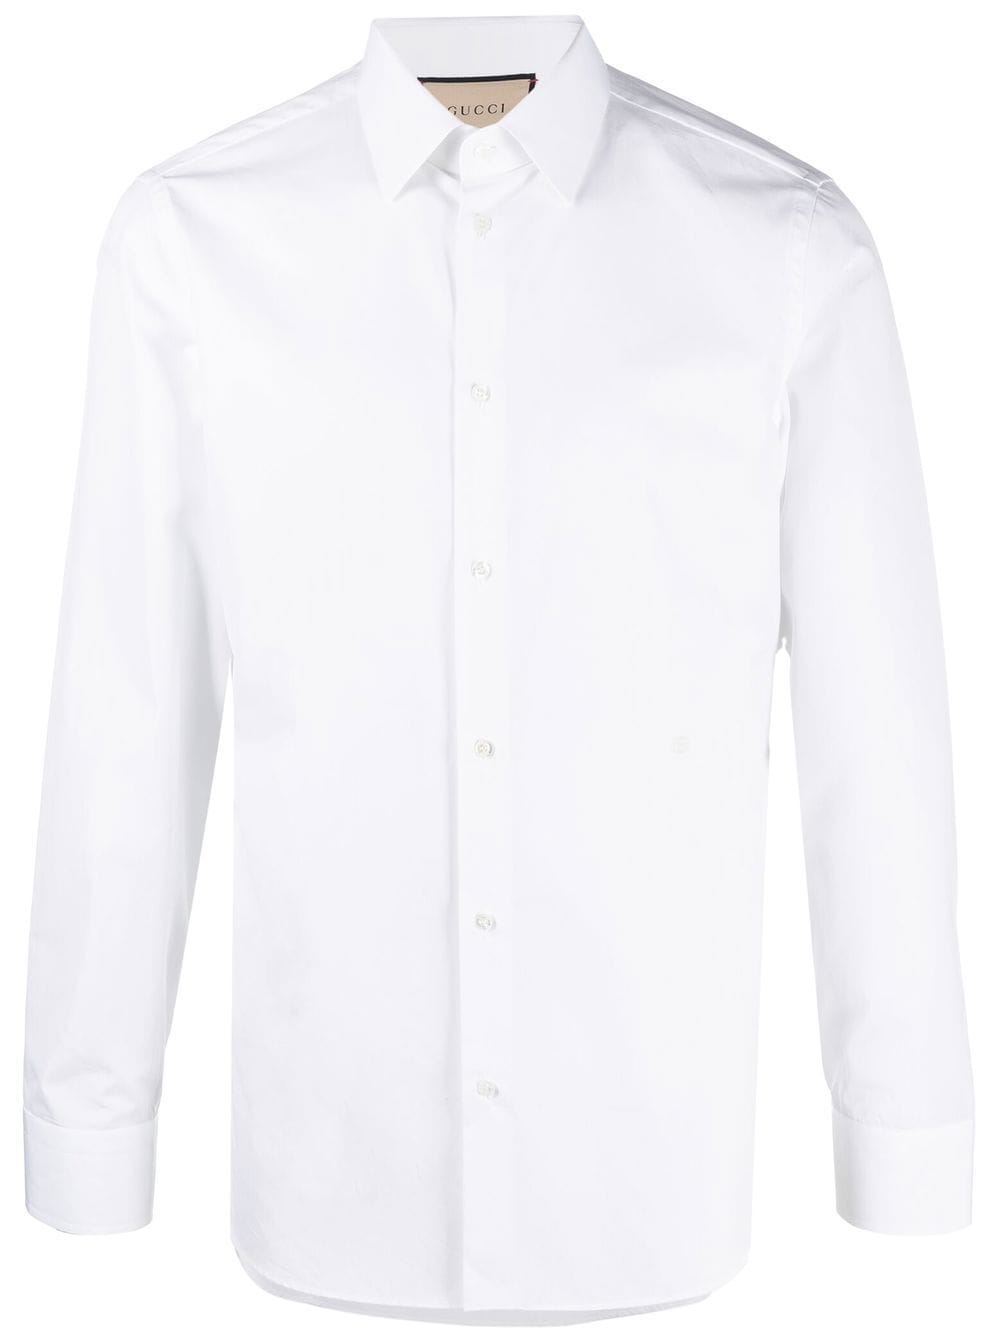 GUCCI Embroidered Interlocking G Logo Cotton Shirt for Men in White